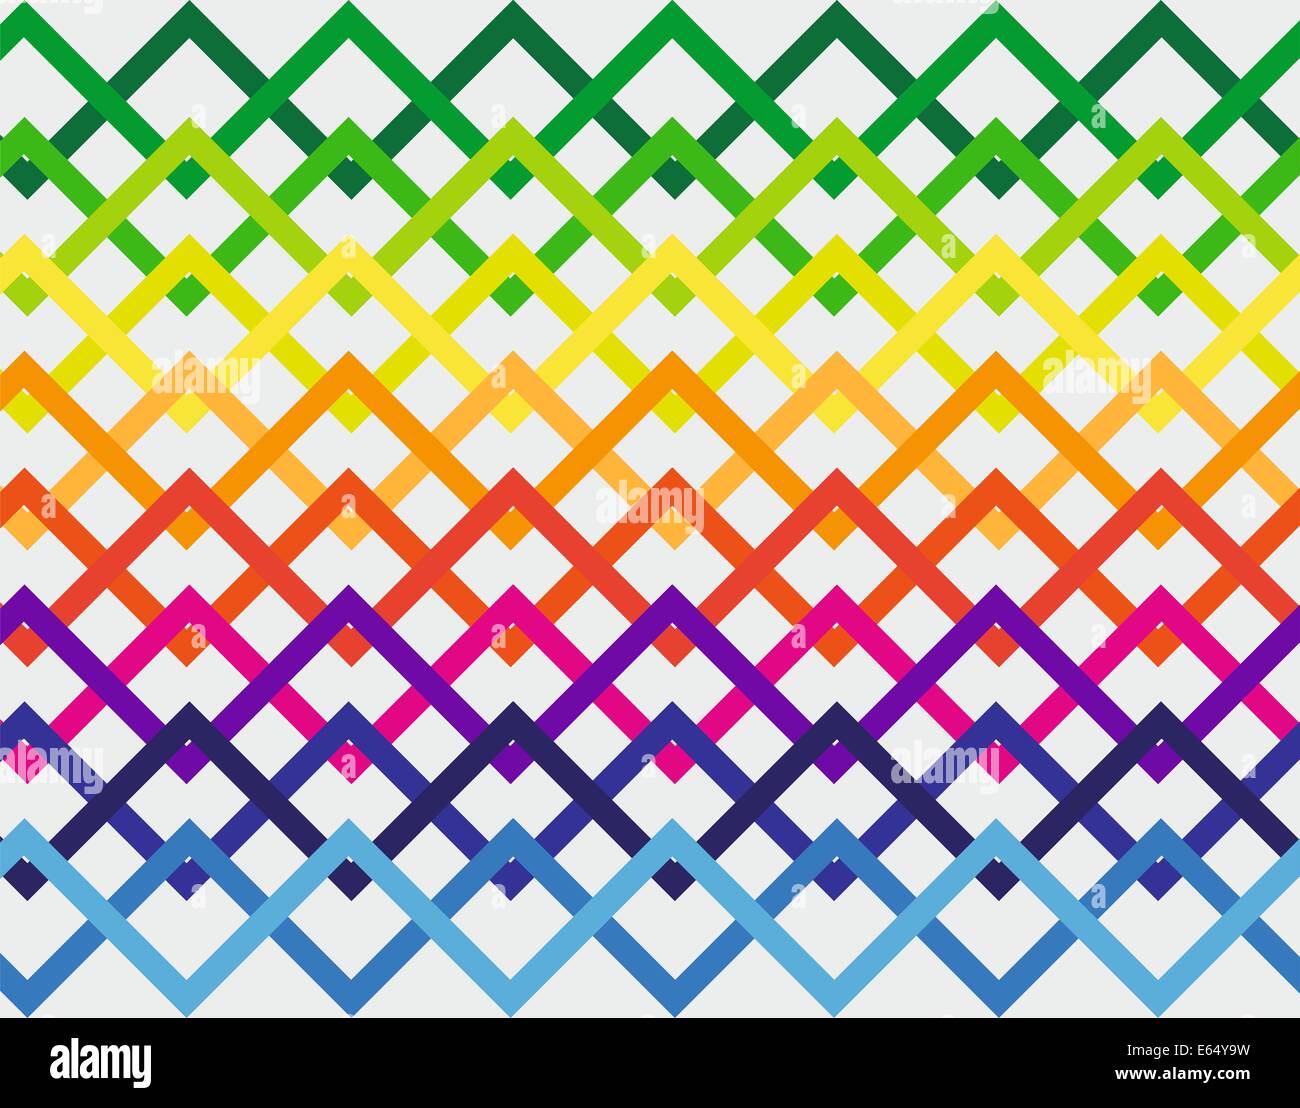 Traccia Zack Zickzack Muster versetzt versetztes bunt Regenbogen farbenfroh farbenfrohes vollfarbe vollfarbig grundfarbe grundfarbe Foto Stock